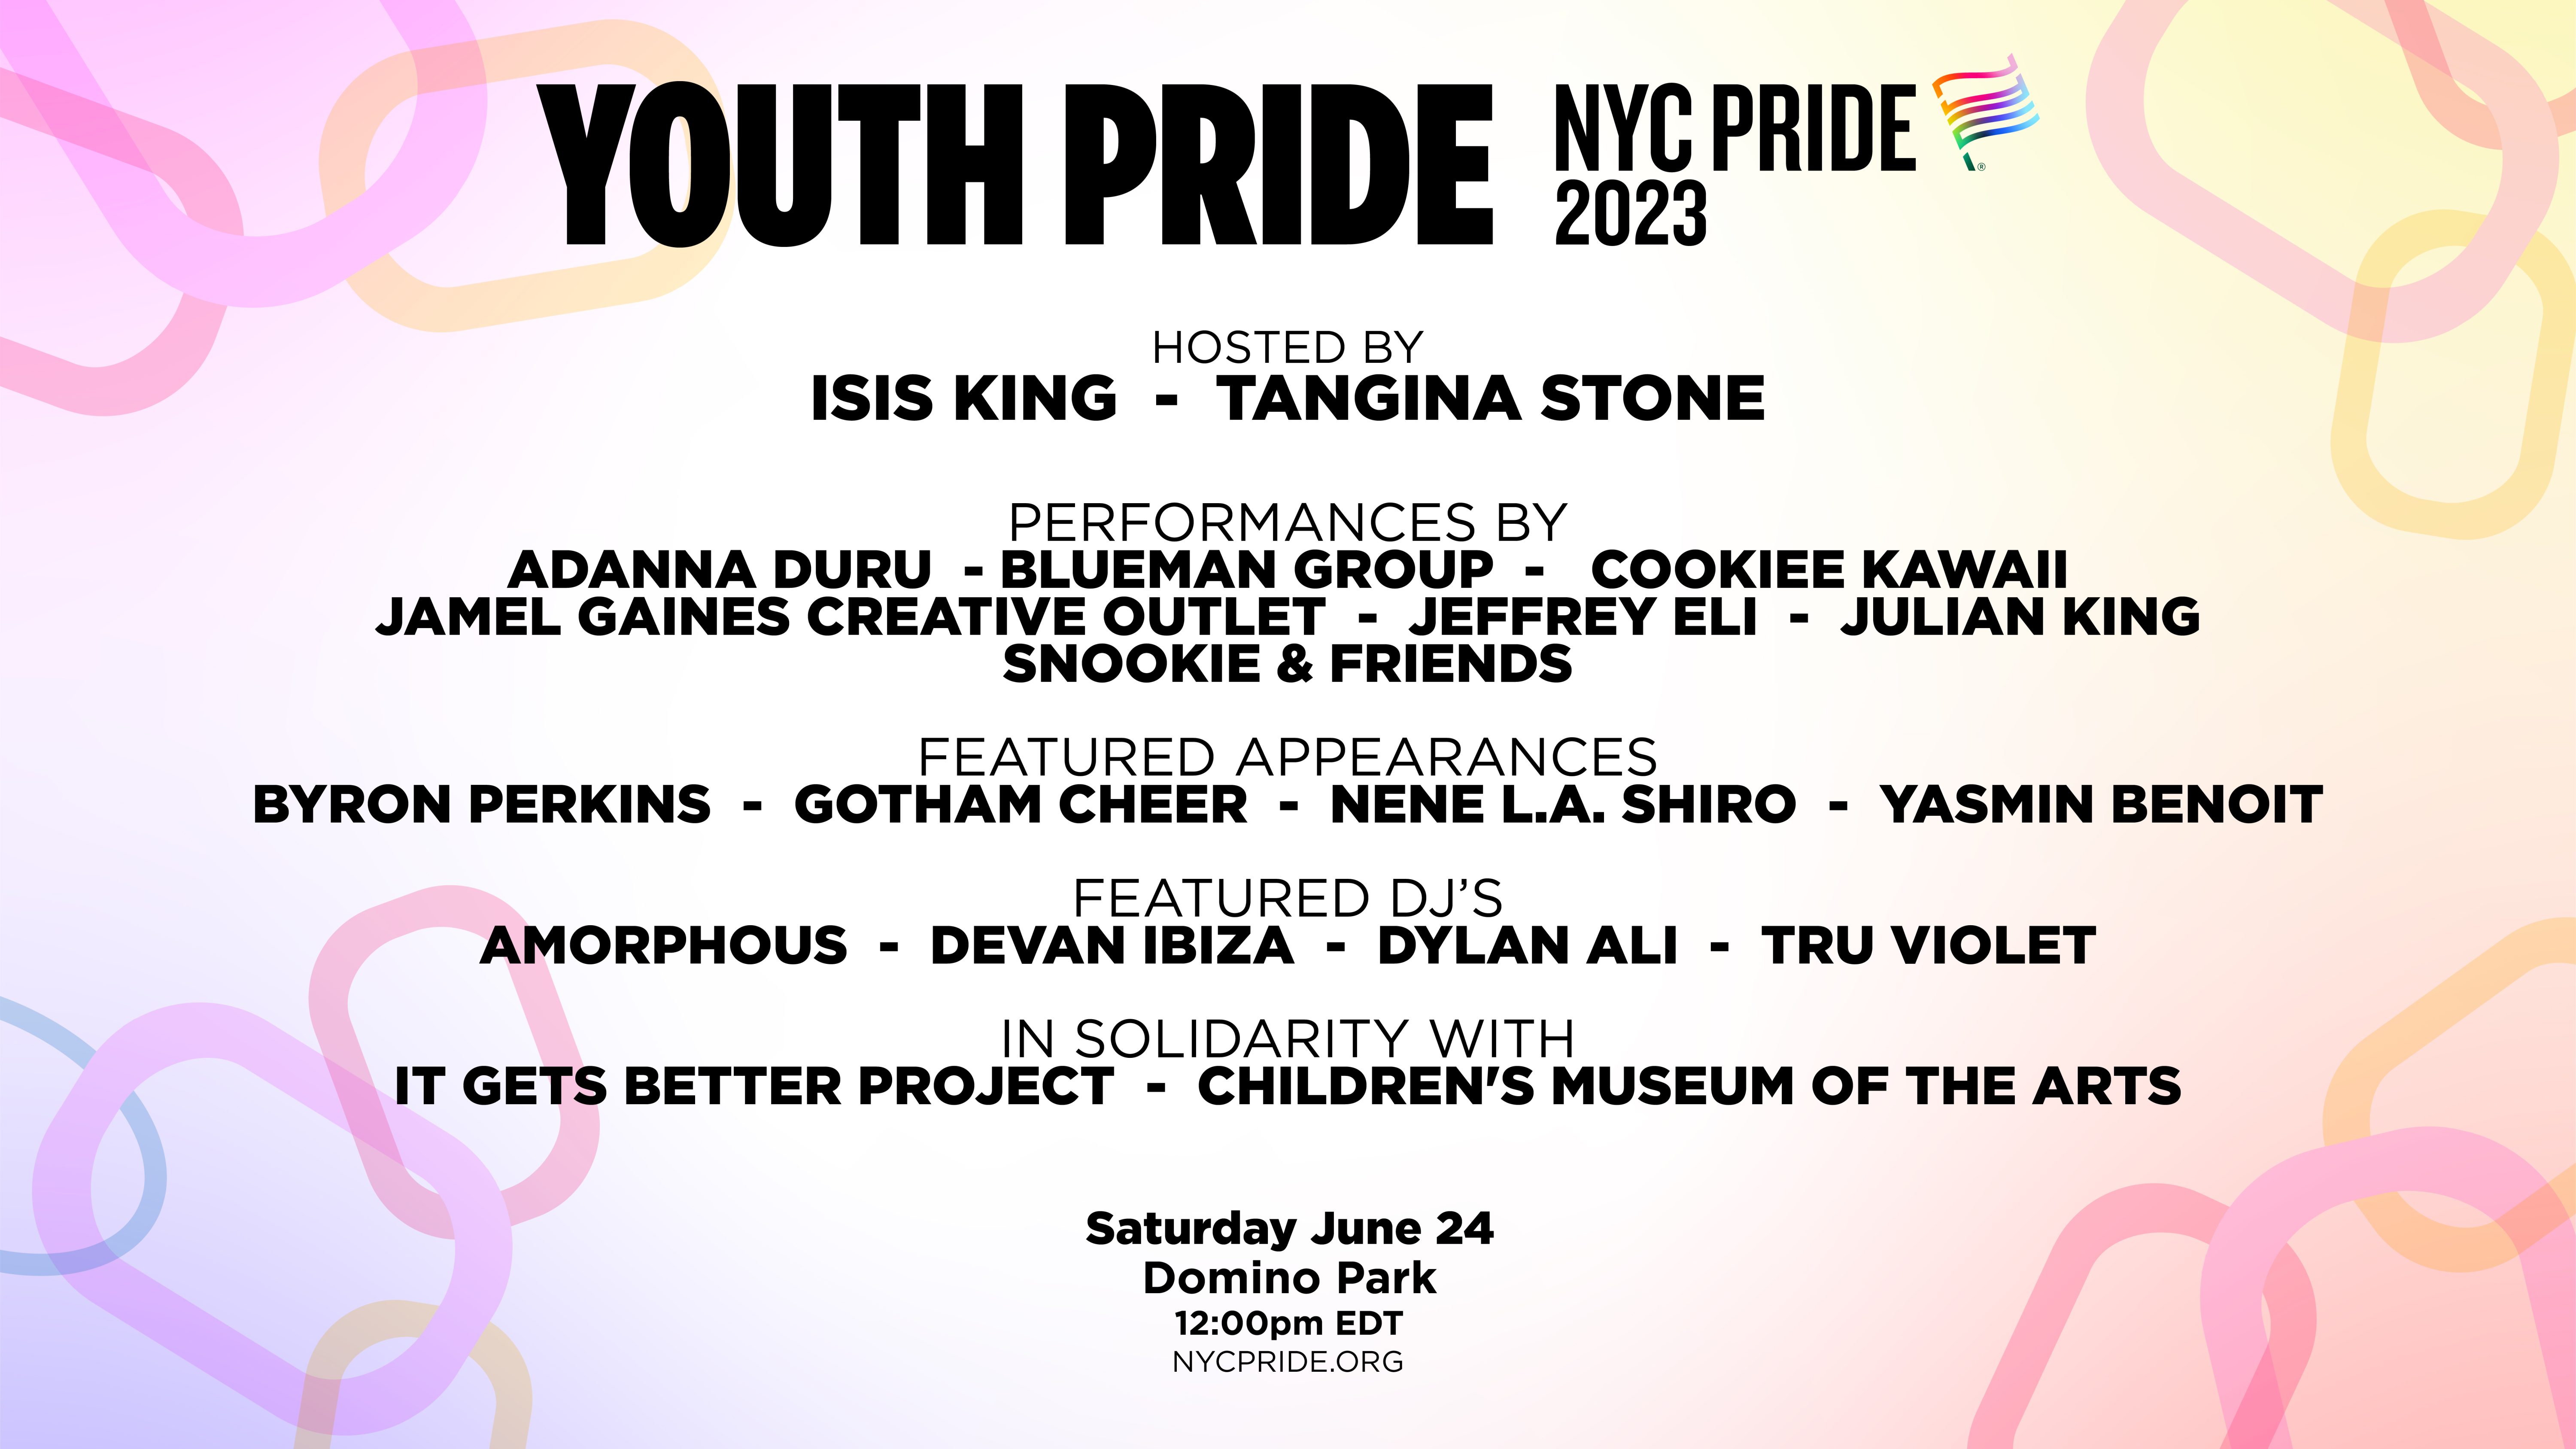 NYC Pride 2023: Youth Pride